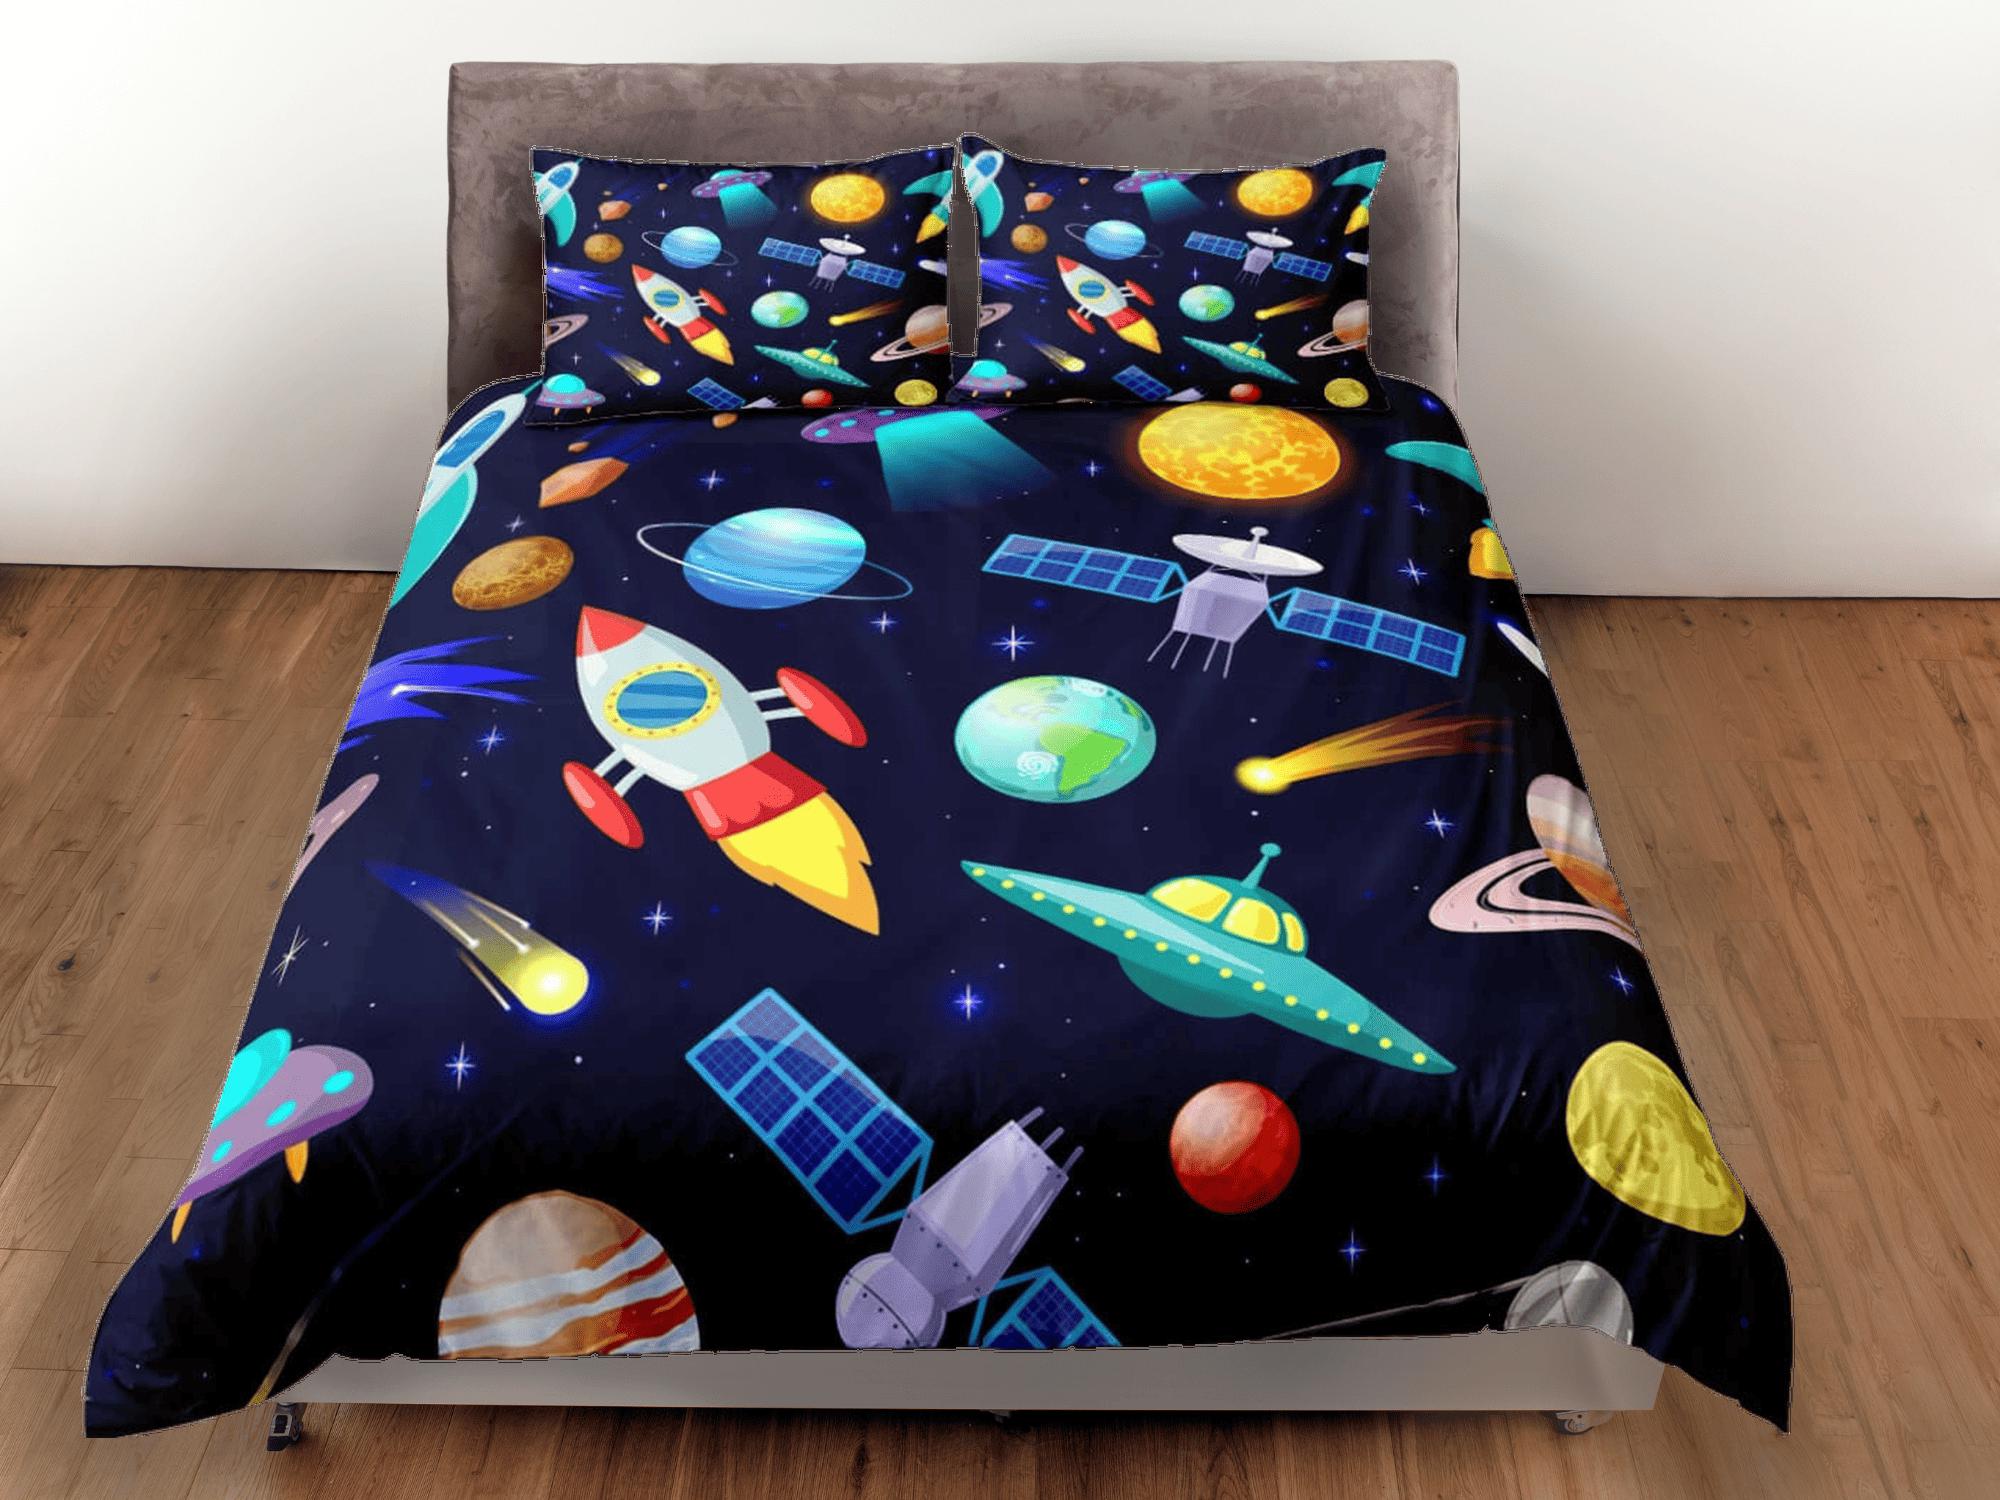 daintyduvet Satellite and spaceship duvet cover set for kids, galaxy bedding set full, king, queen, astronomy dorm bedding, toddler bedding aesthetic